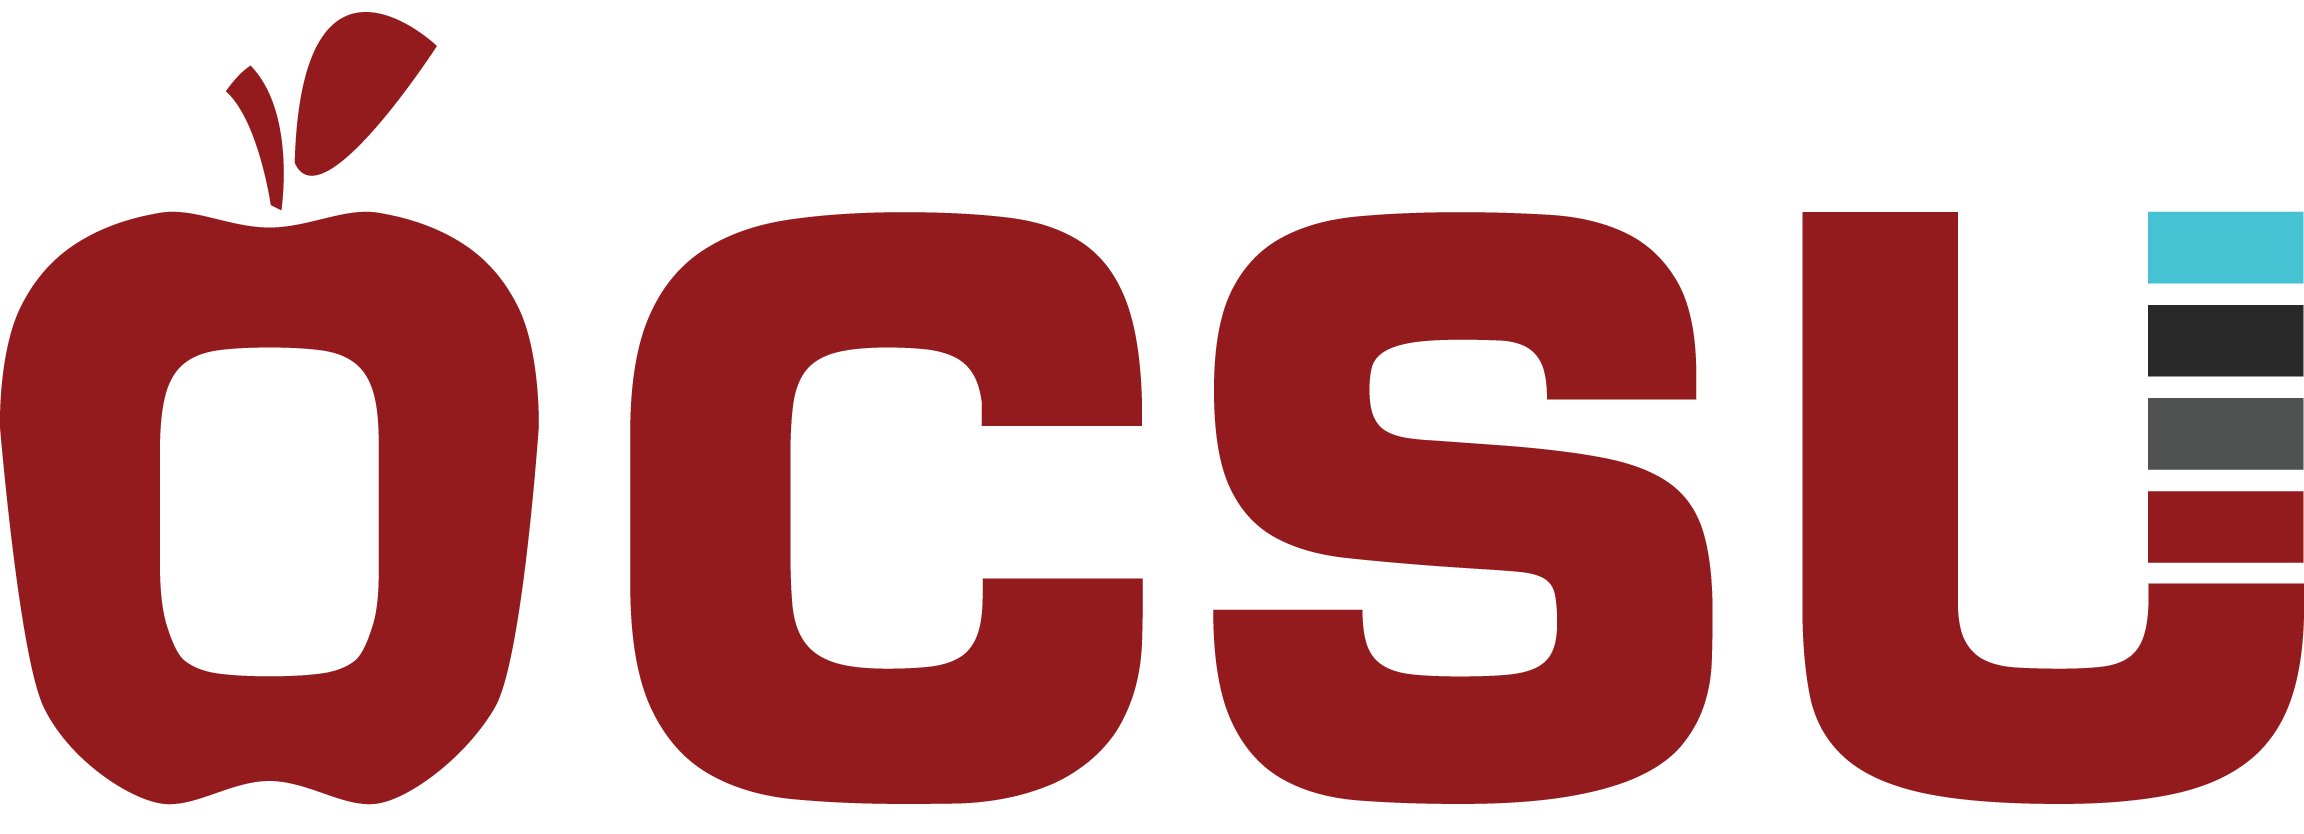 Bcfs Logo - Member Resources | BCFS